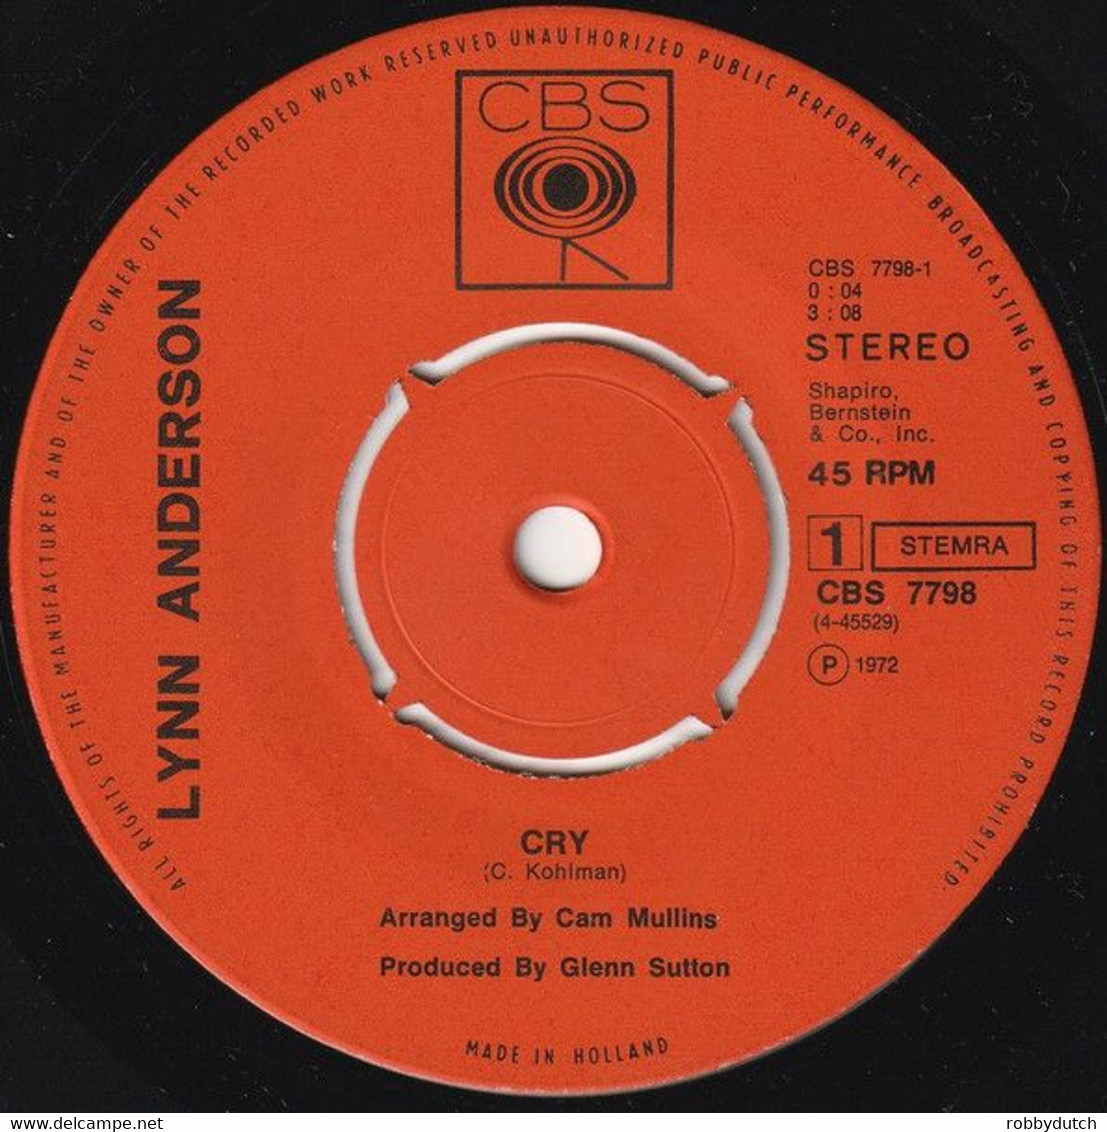 * 7" * LYNN ANDERSON - CRY / SIMPLE WORDS (1972) - Country & Folk